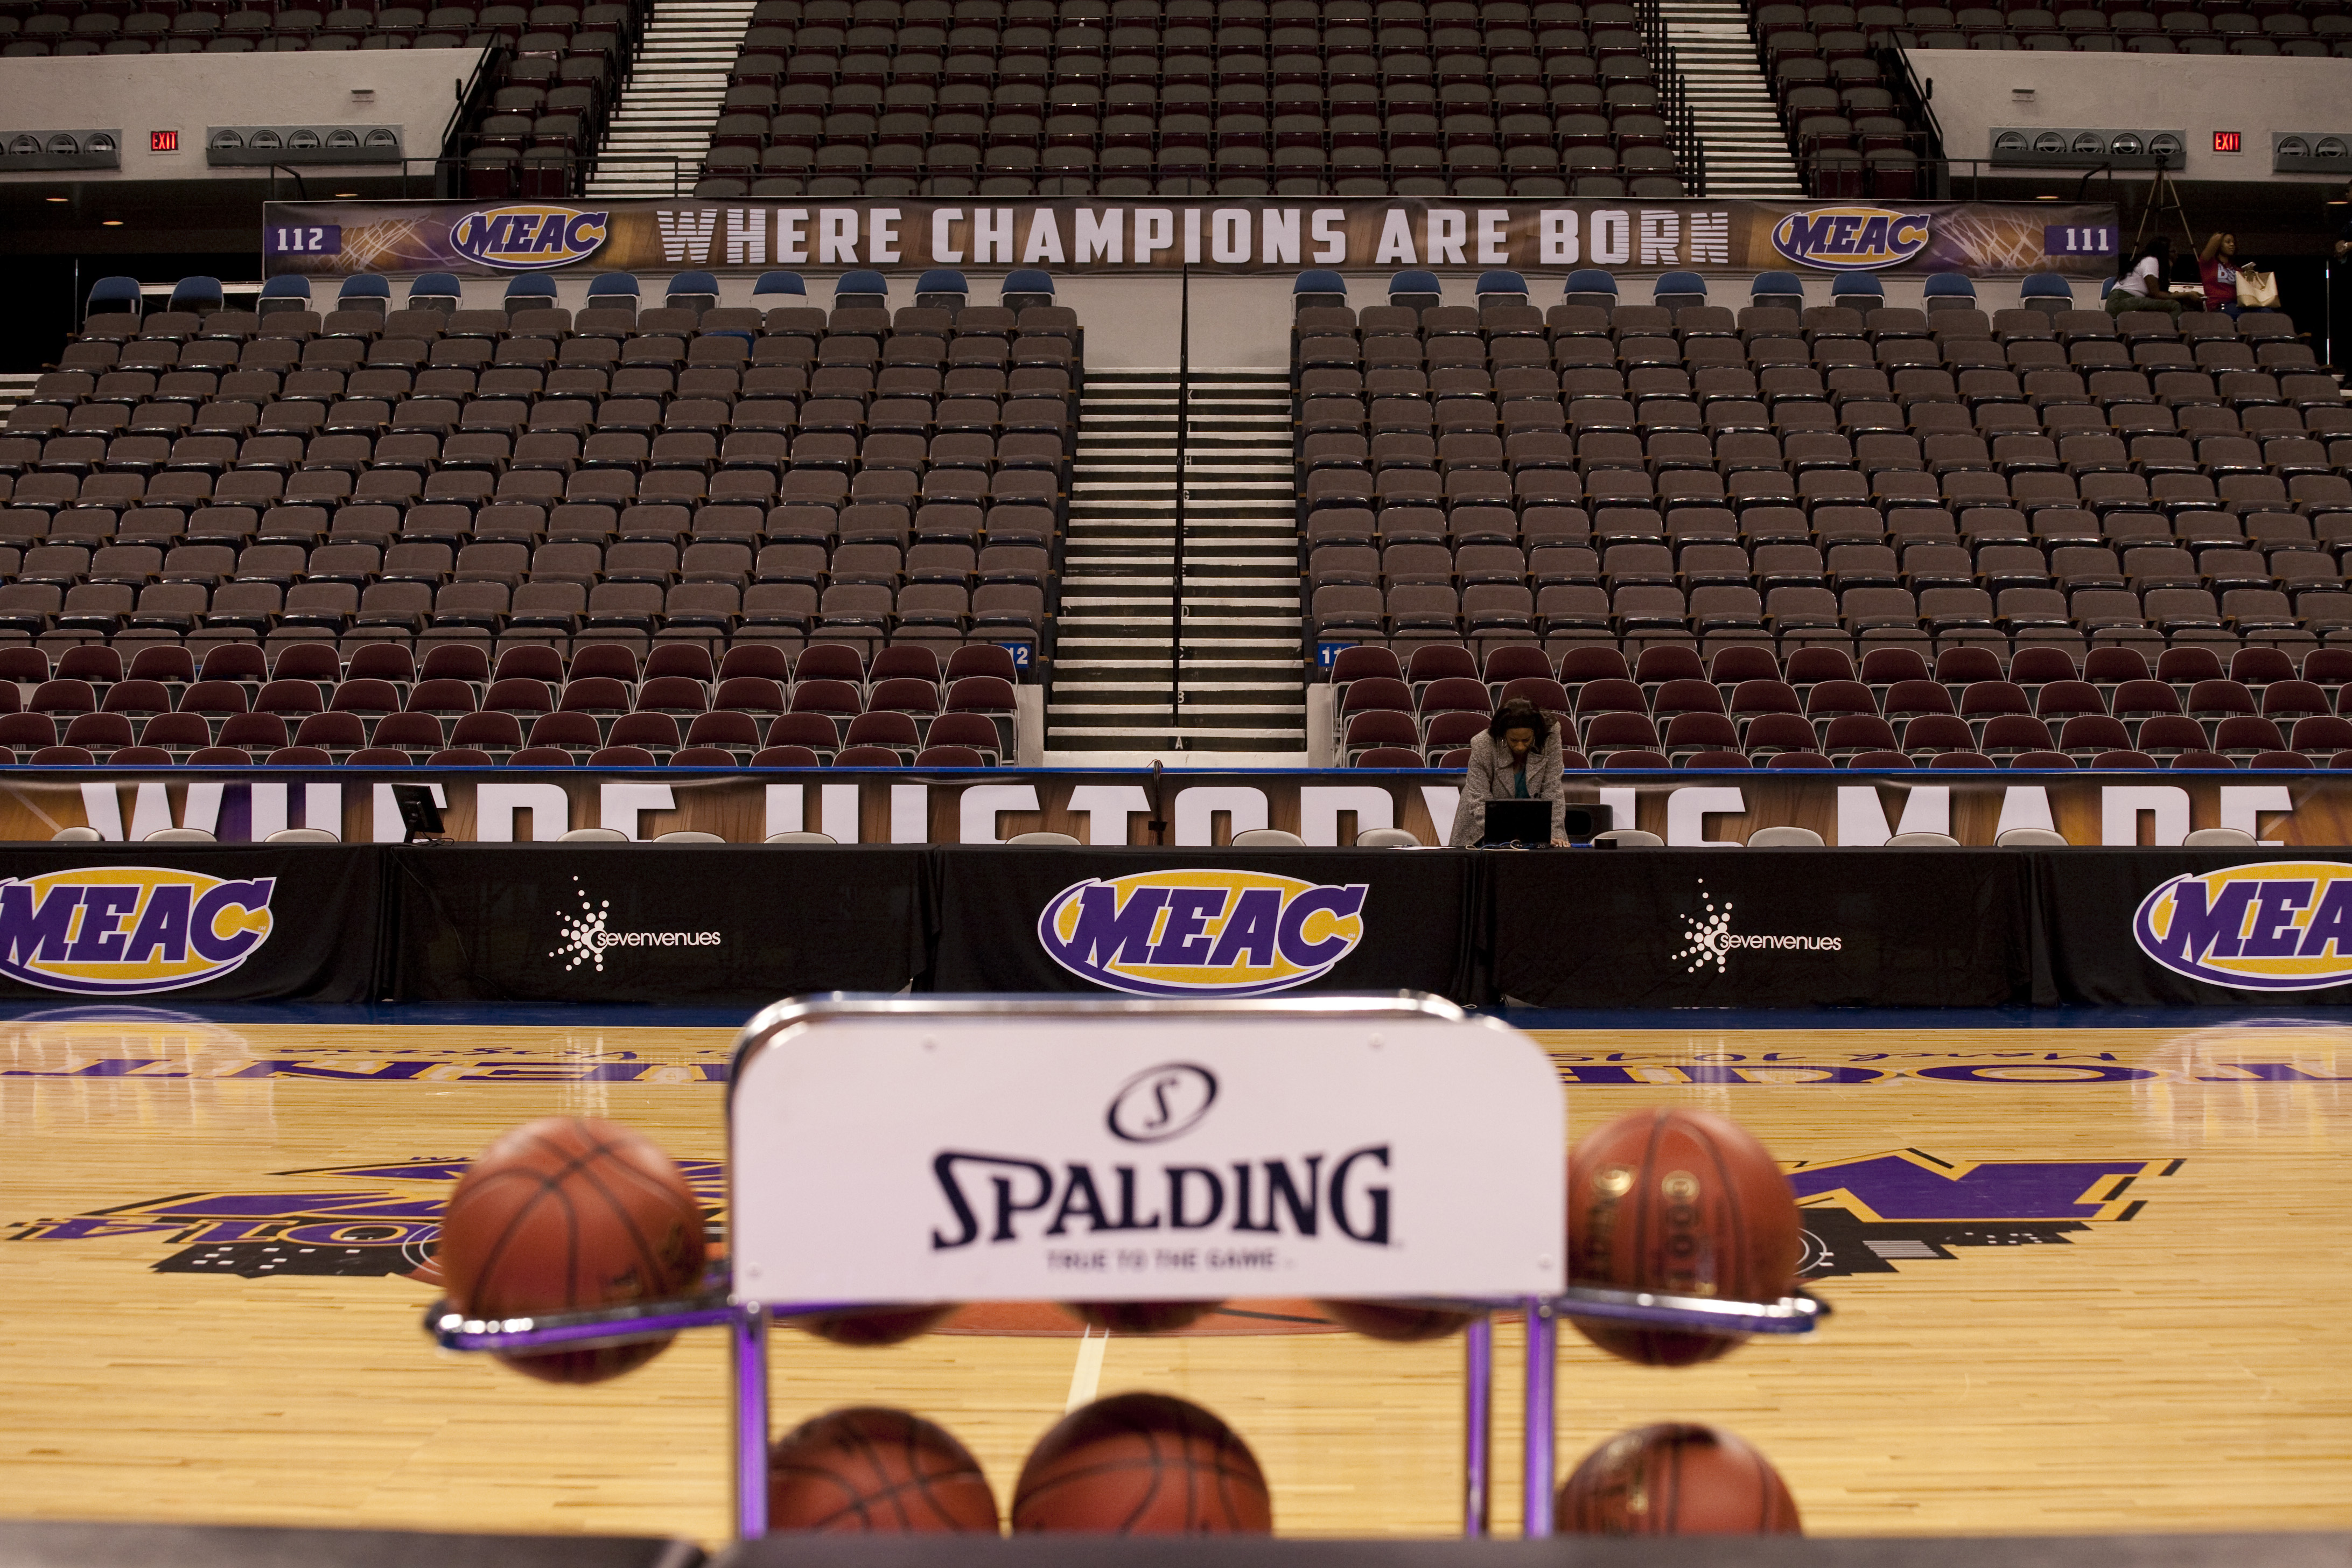 MEAC Basketball Tournament